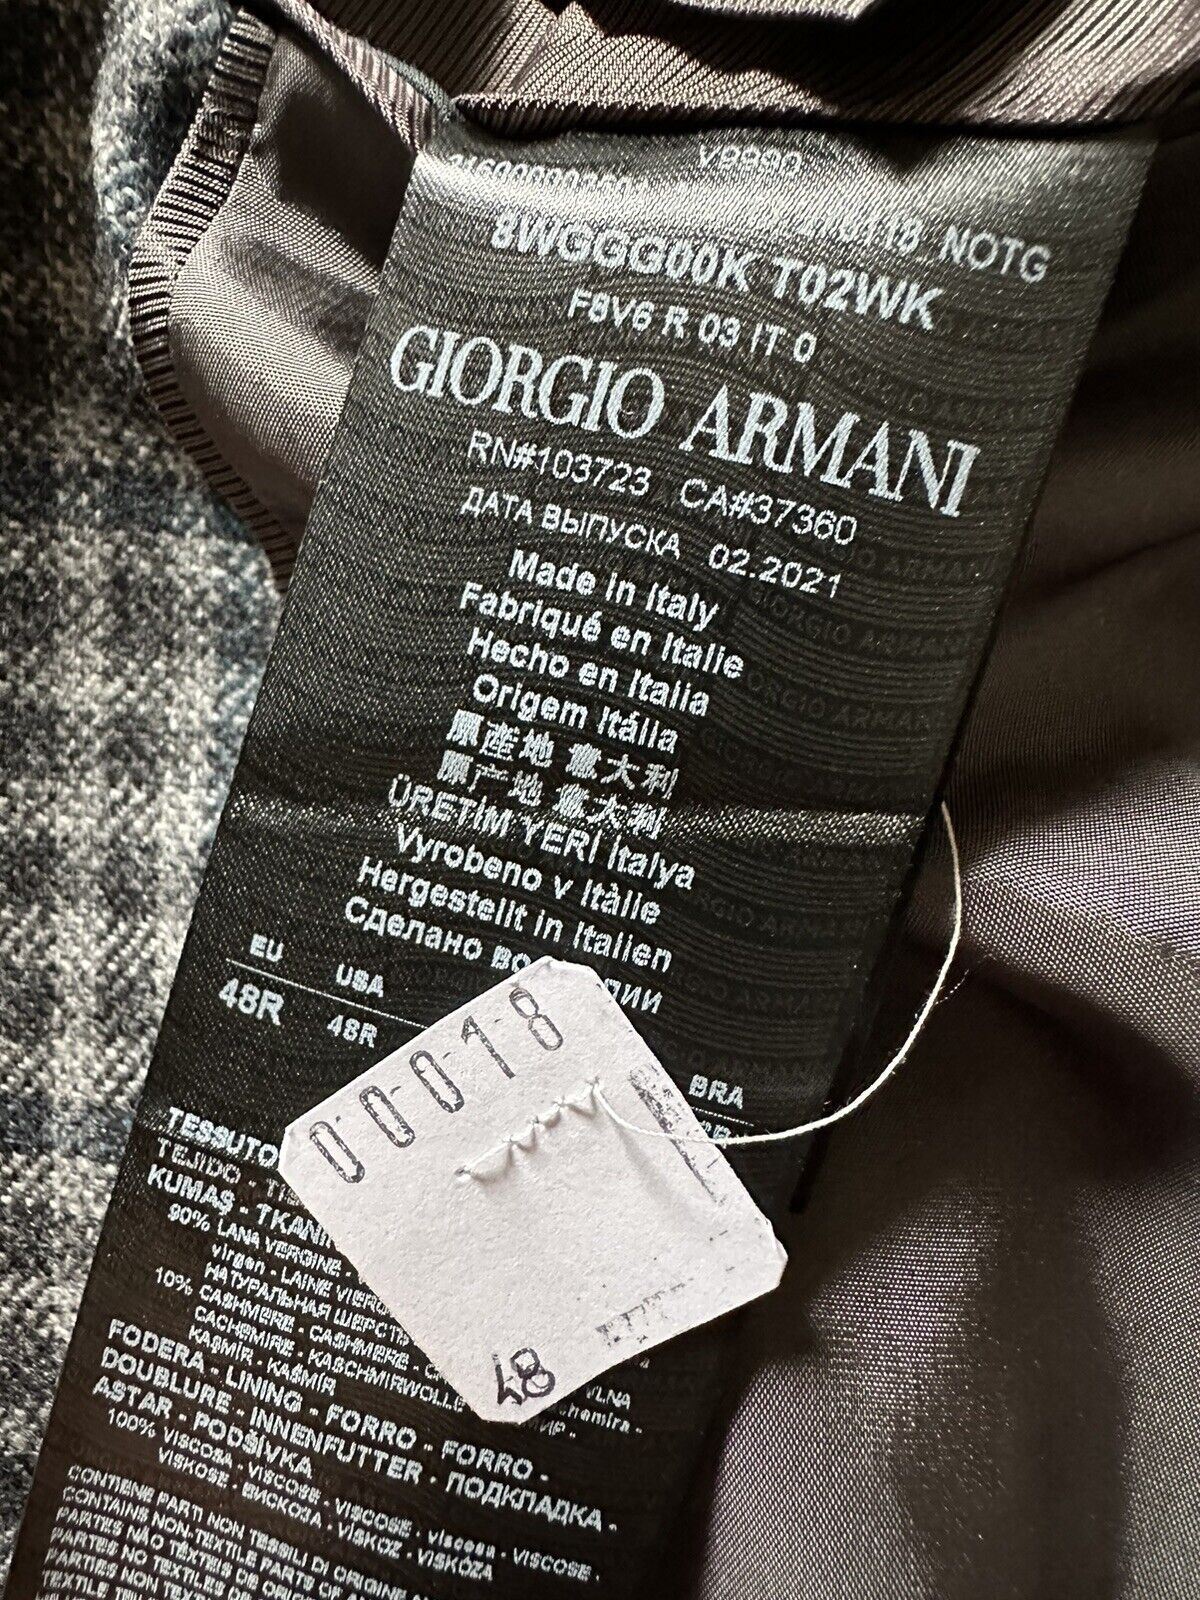 NWT $2395 Giorgio Armani Мужская спортивная куртка в клетку Блейзер Br/Gr/Grin 38 US/48E